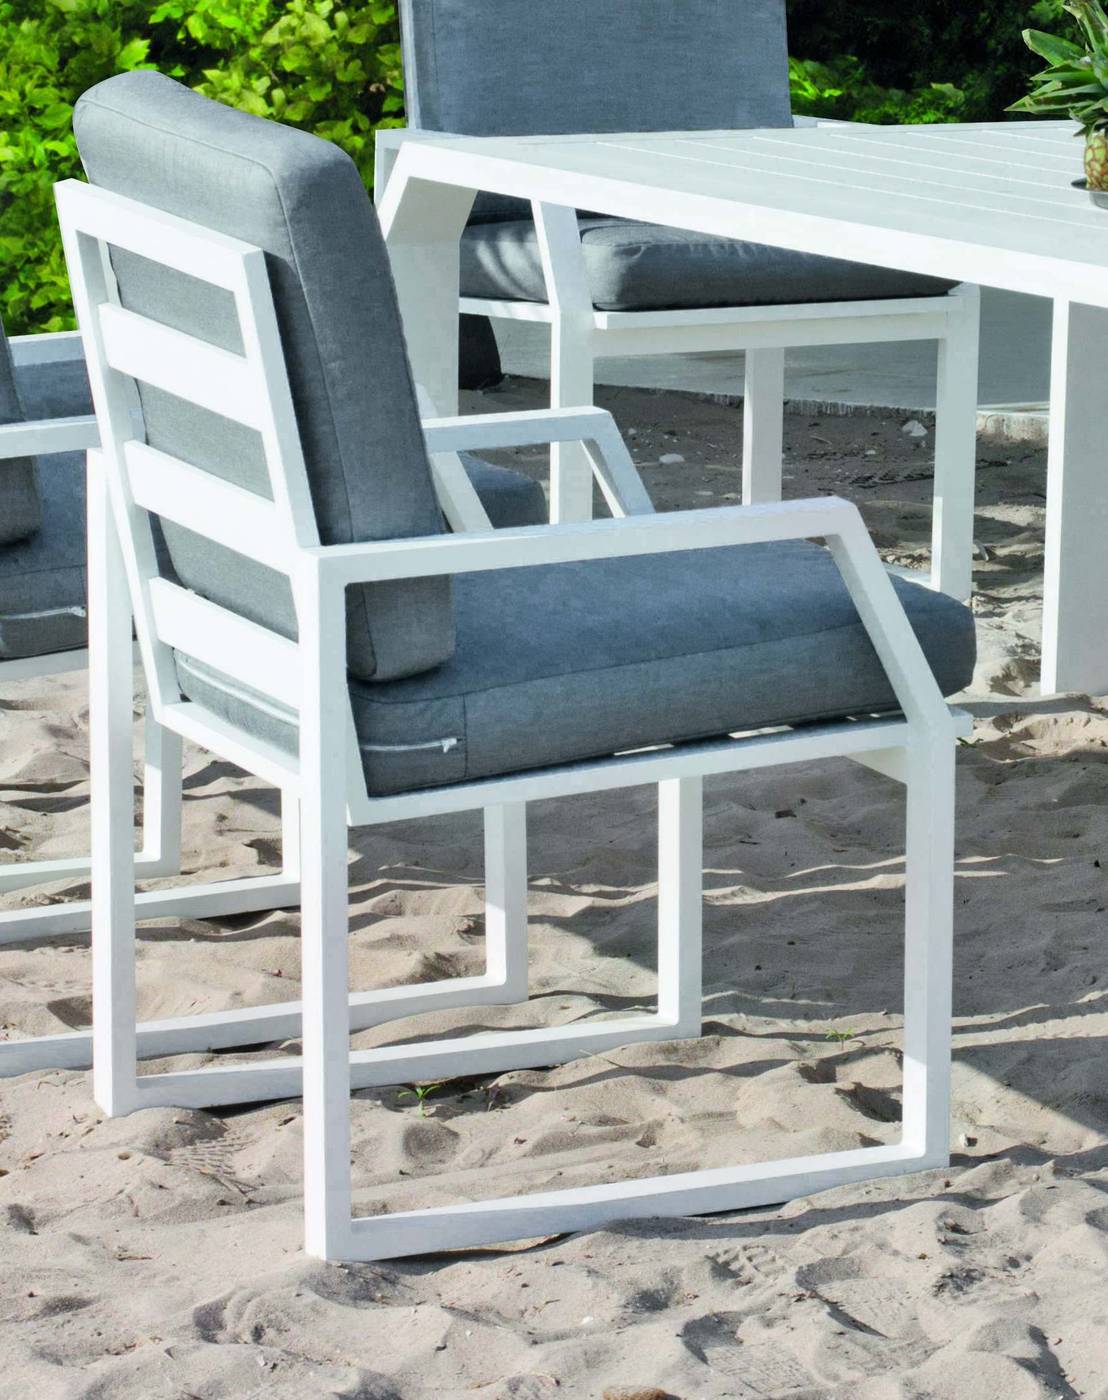 Set Aluminio Copacabana-Zafiro 200-8 - Conjunto de aluminio luxe: Mesa de comedor octogonal extra grande de 200 cm. + 8 sillones + cojines. Disponible en color blanco, antracita, champagne, plata o marrón.